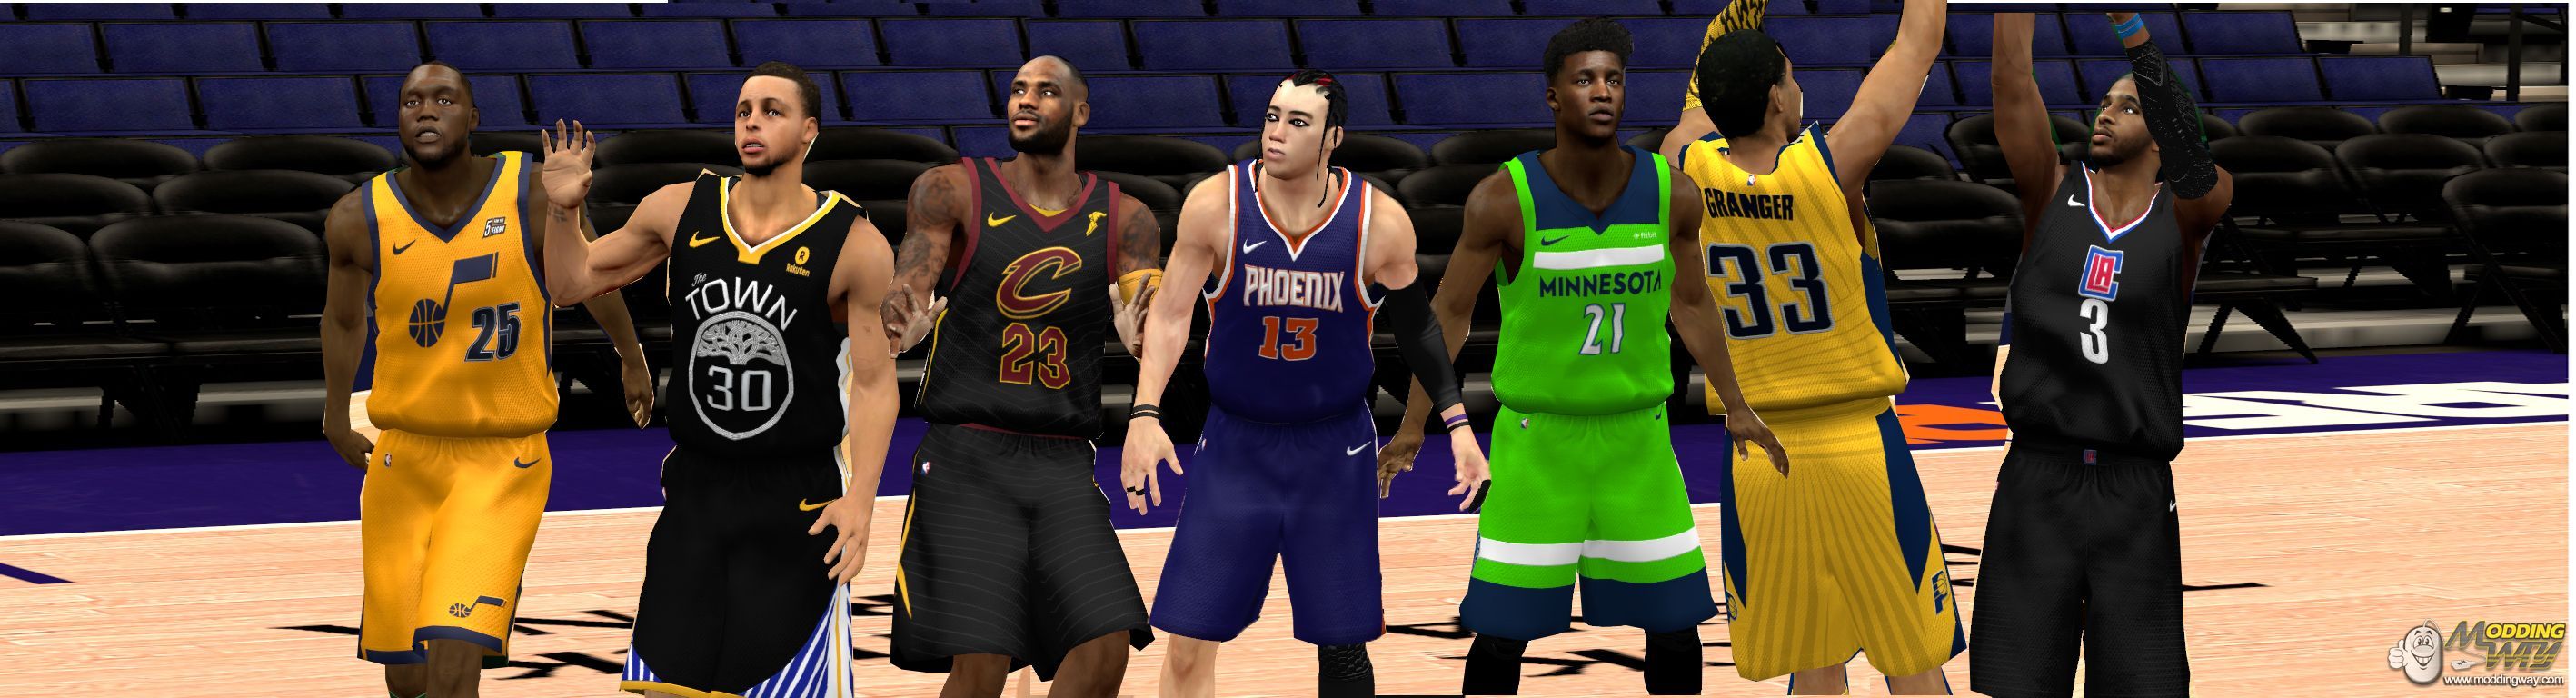 30 teams nike jersey update - NBA 2K13 